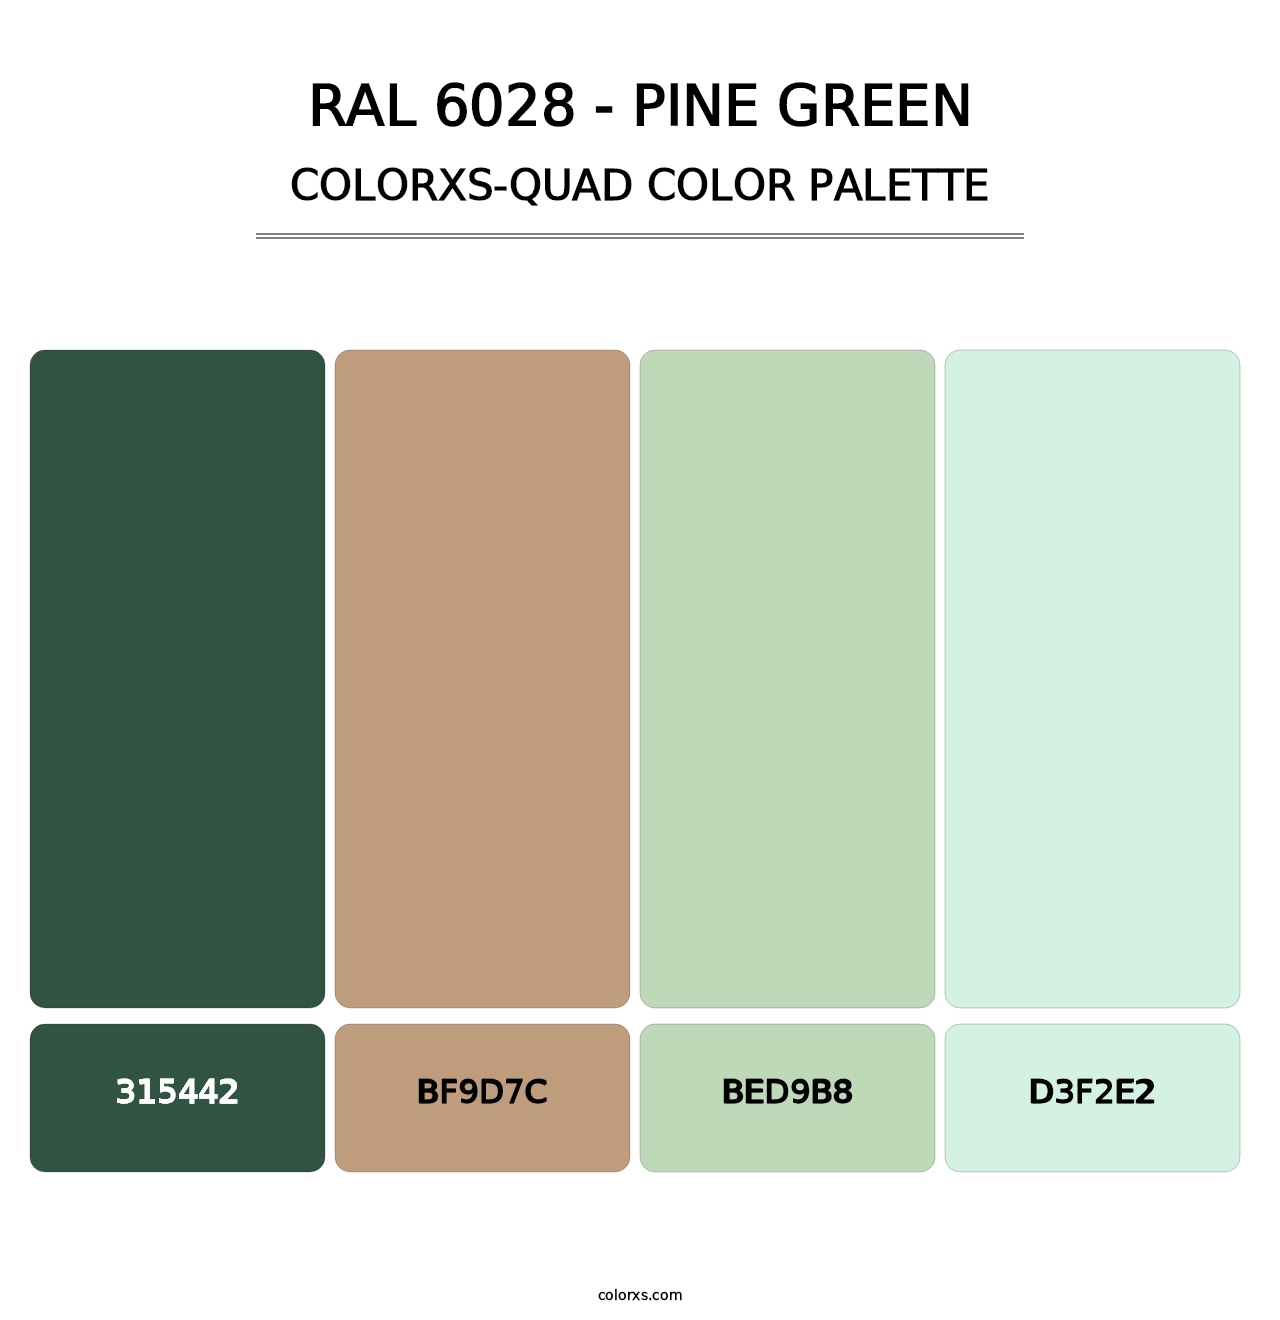 RAL 6028 - Pine Green - Colorxs Quad Palette